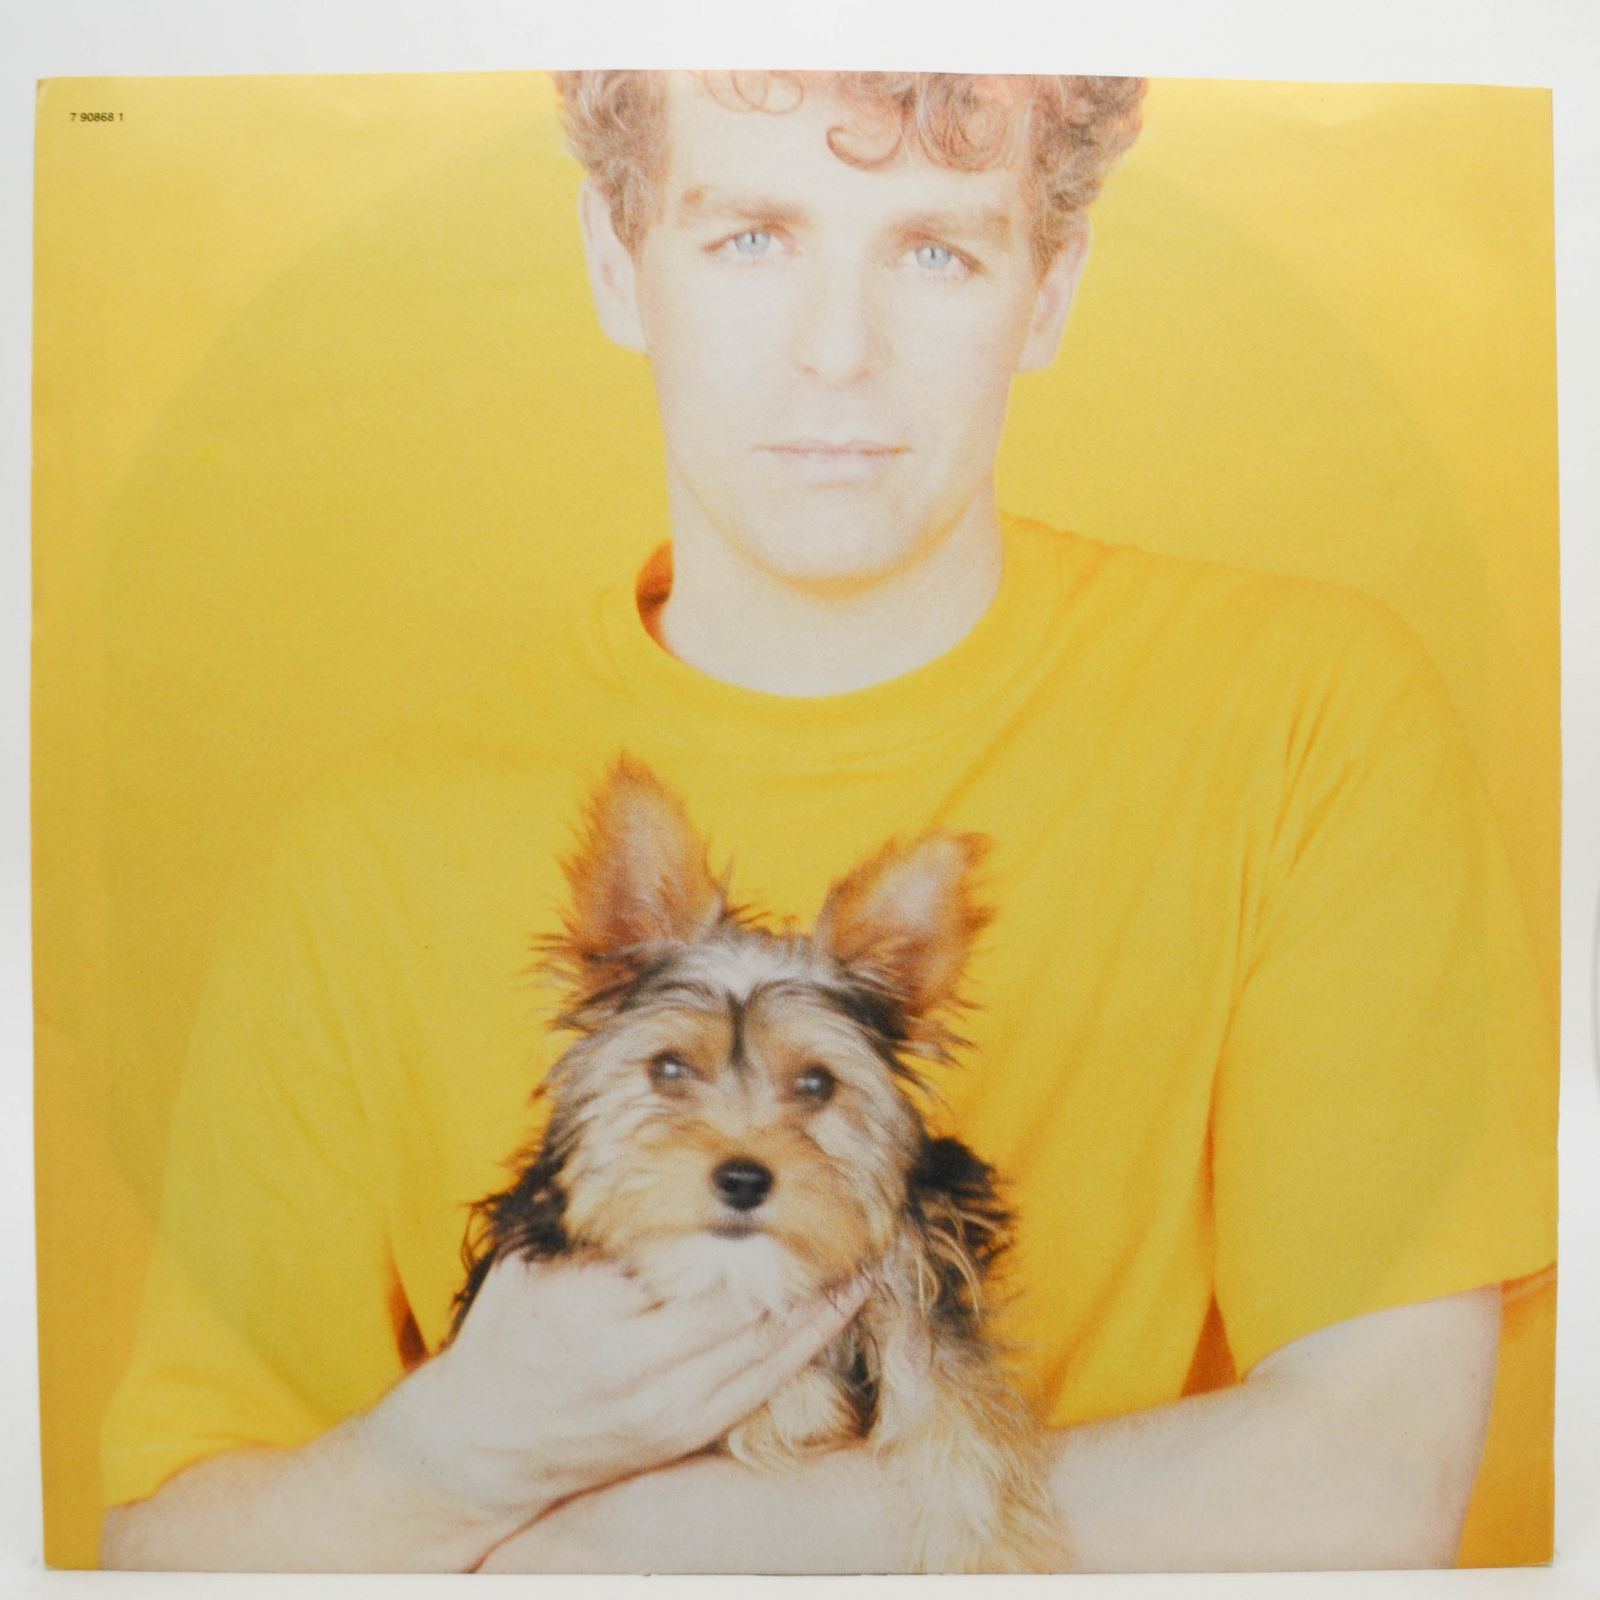 Pet Shop Boys — Introspective, 1989